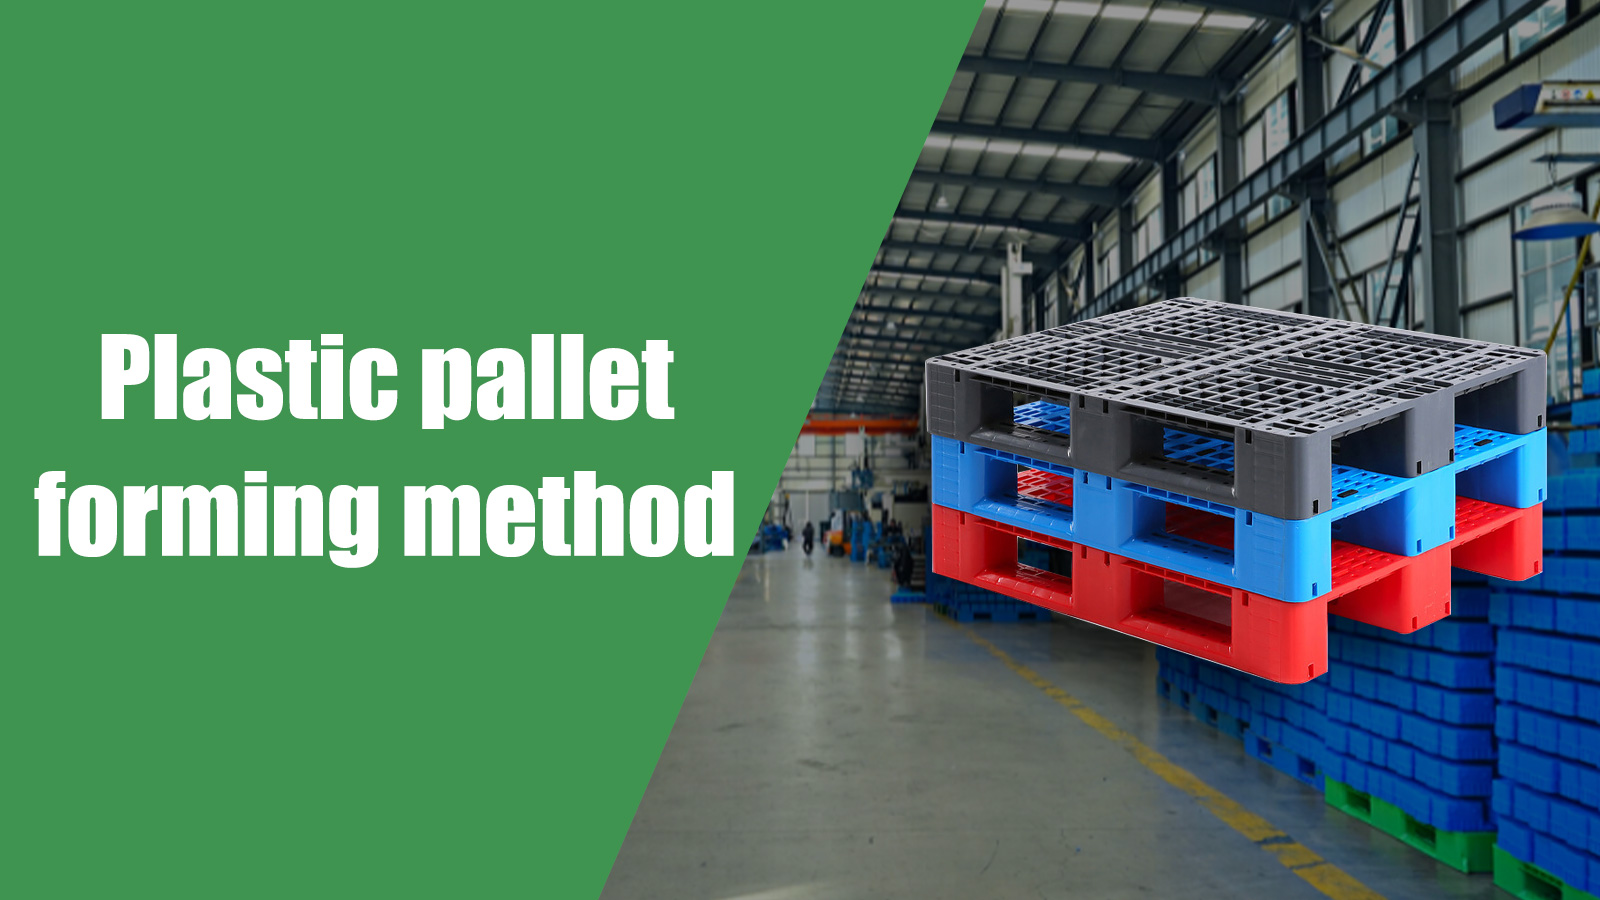 Plastic pallet forming method